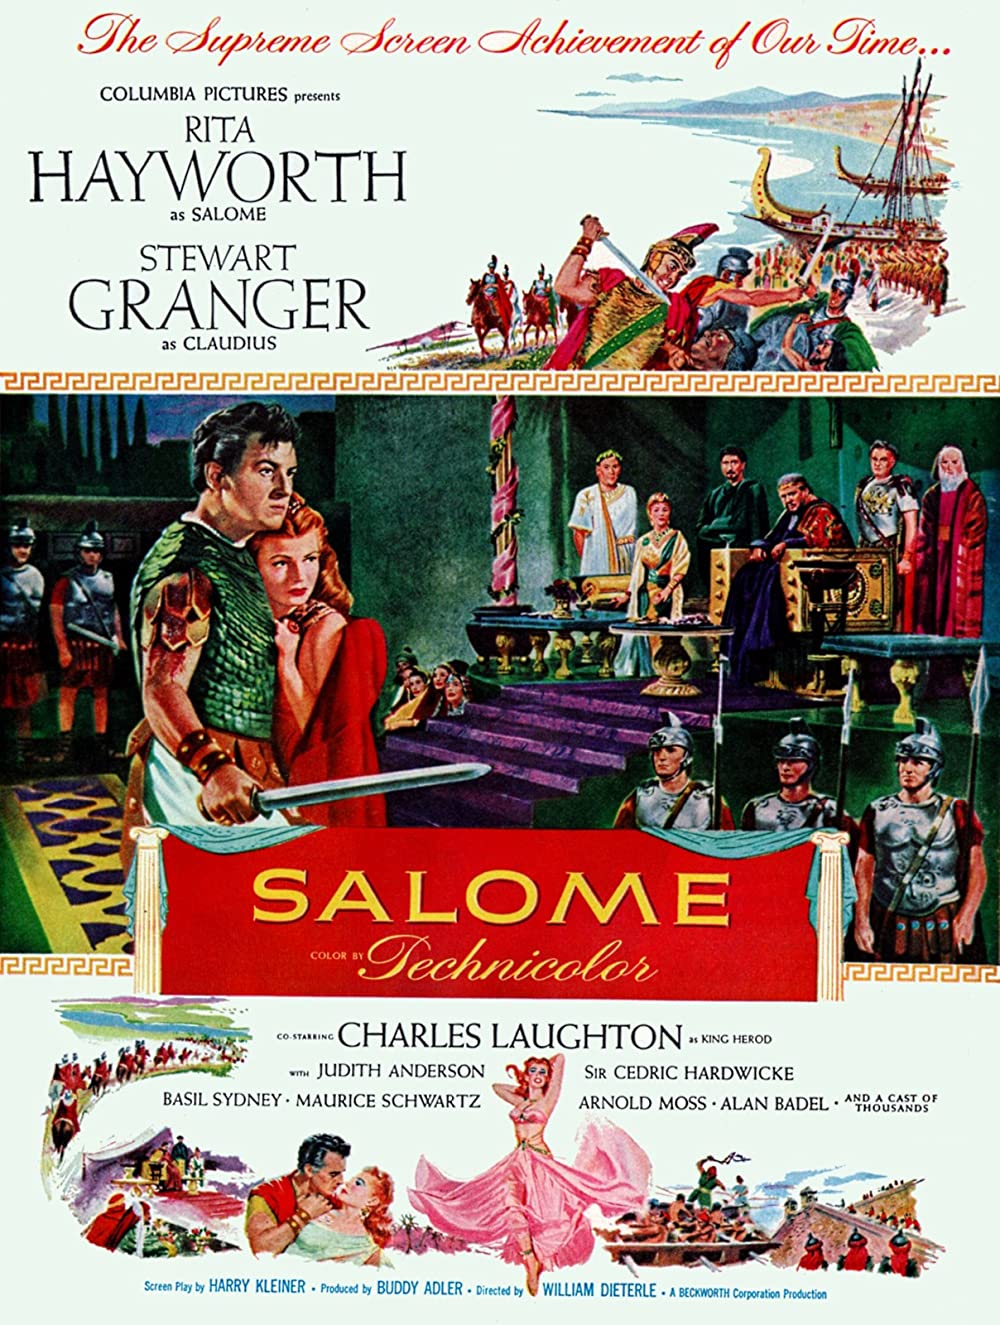 Filmbeschreibung zu Salome (1953)